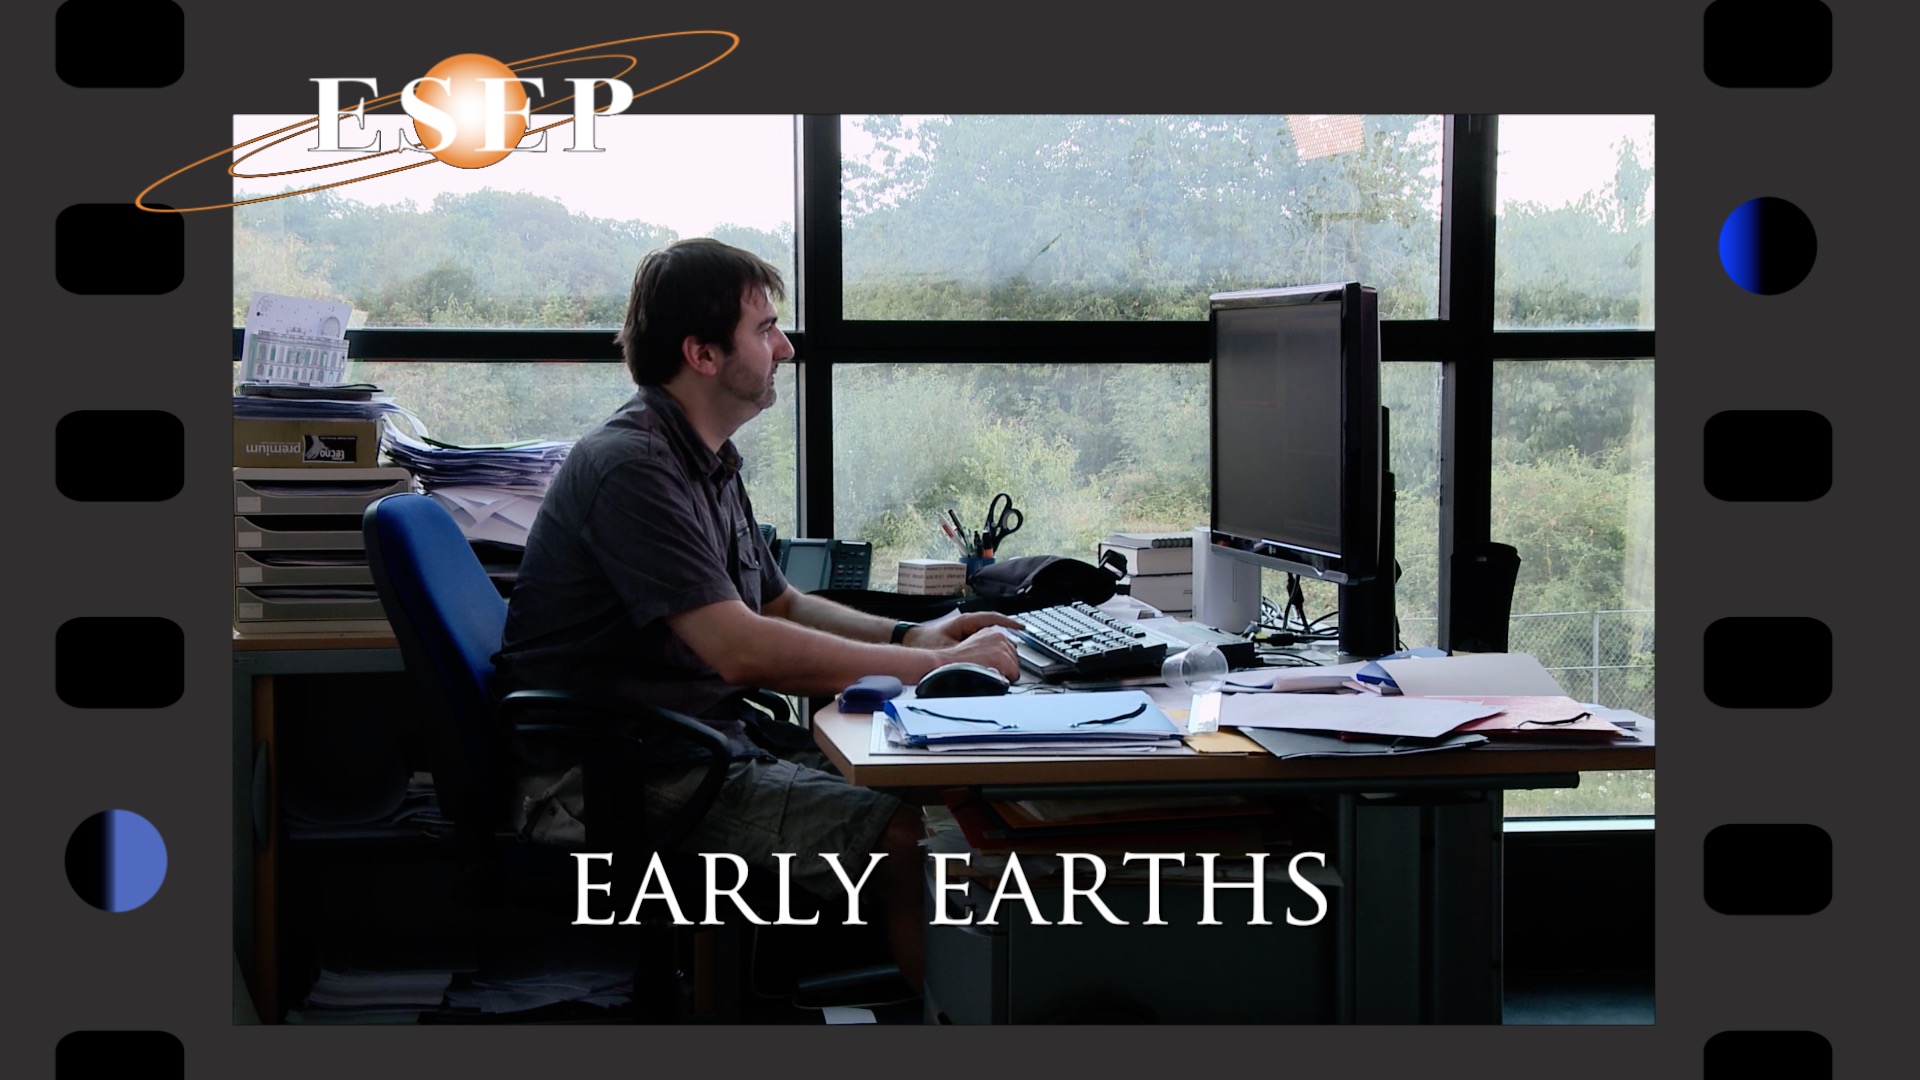 Early earths